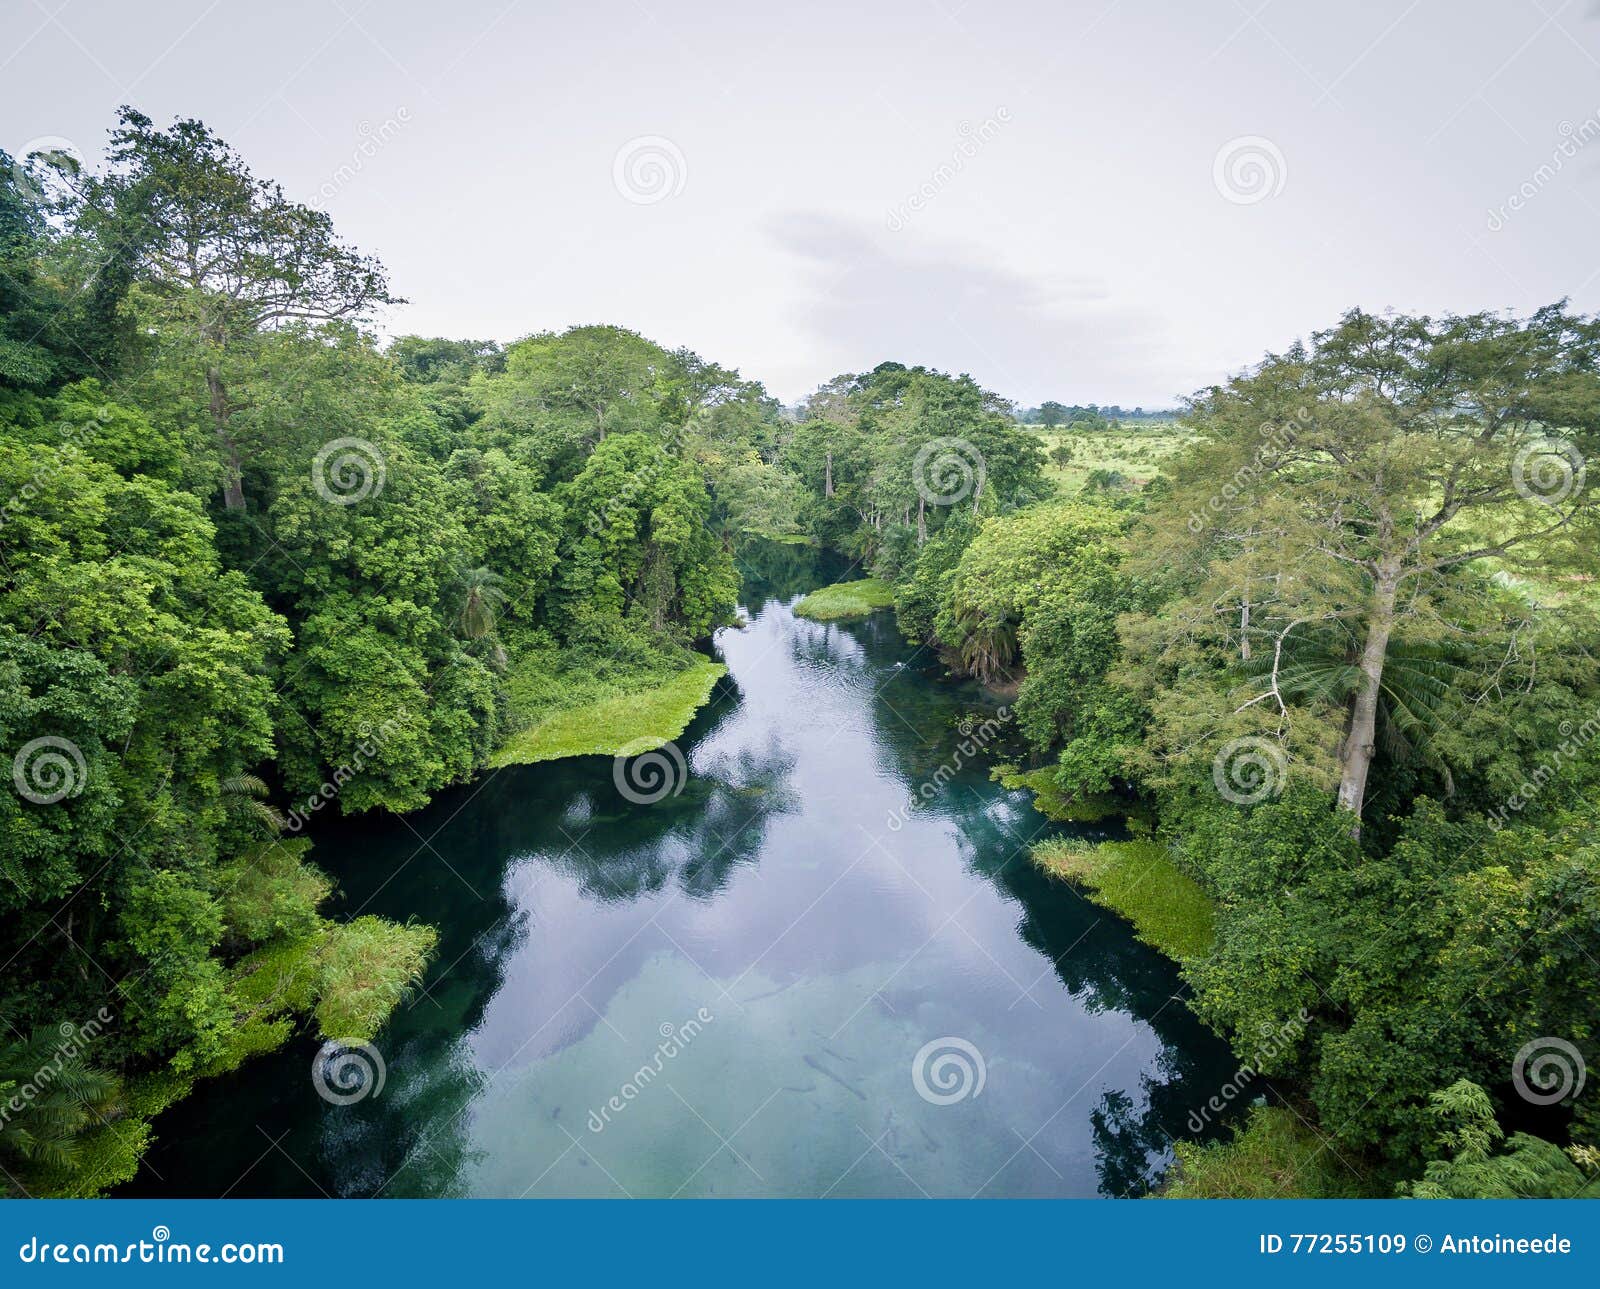 blue river / tulu river / niari river, congo.